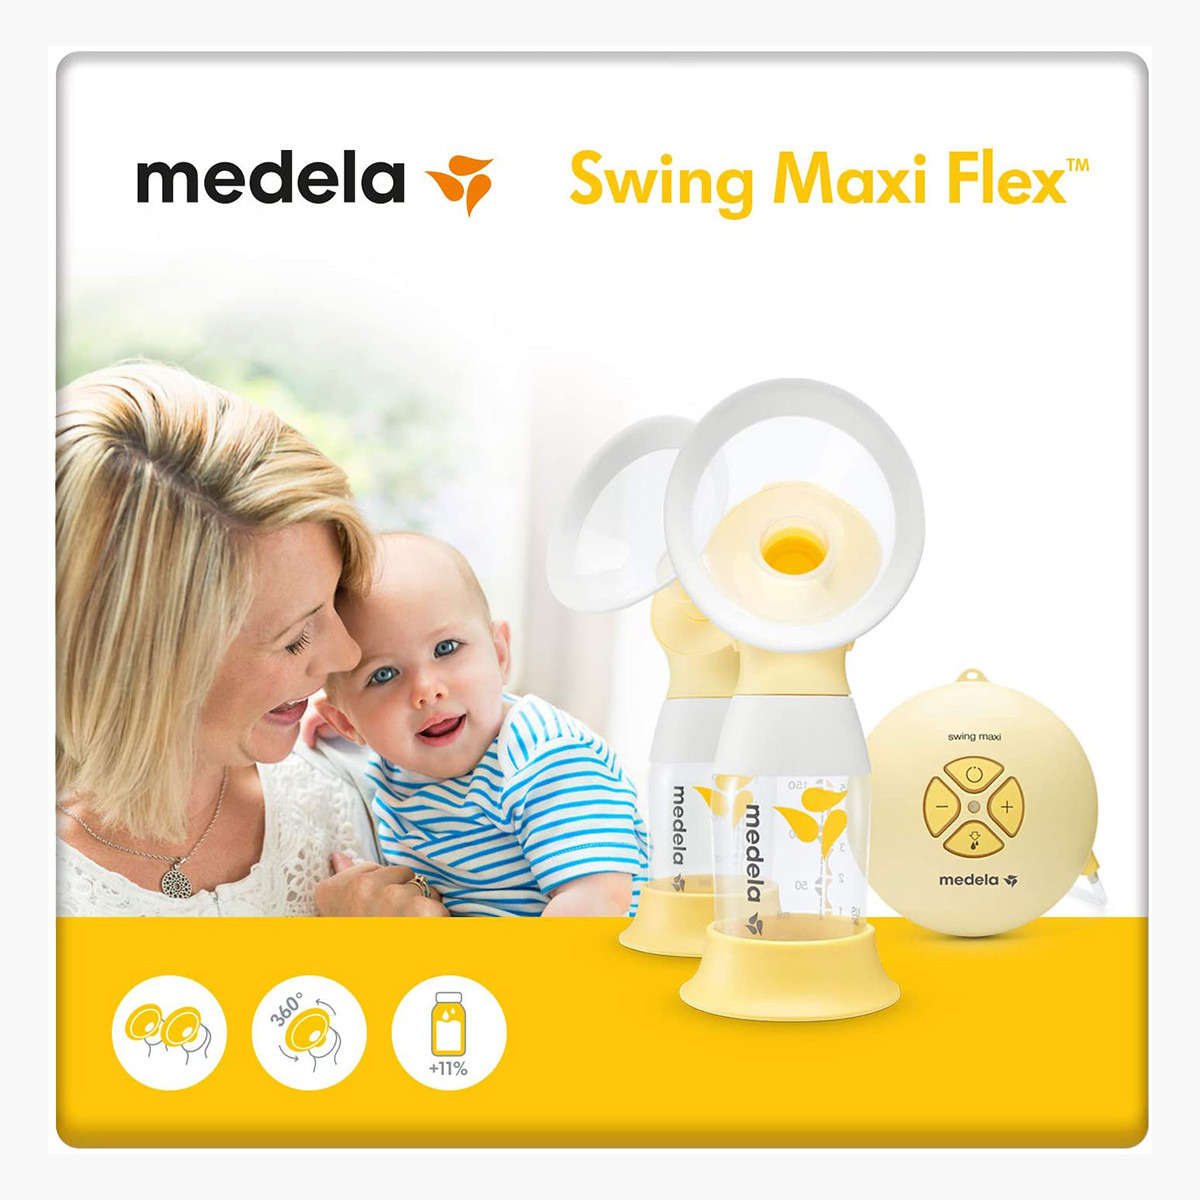 Buy Medela Swing Maxi Flex for Babies Online in UAE | Centrepoint